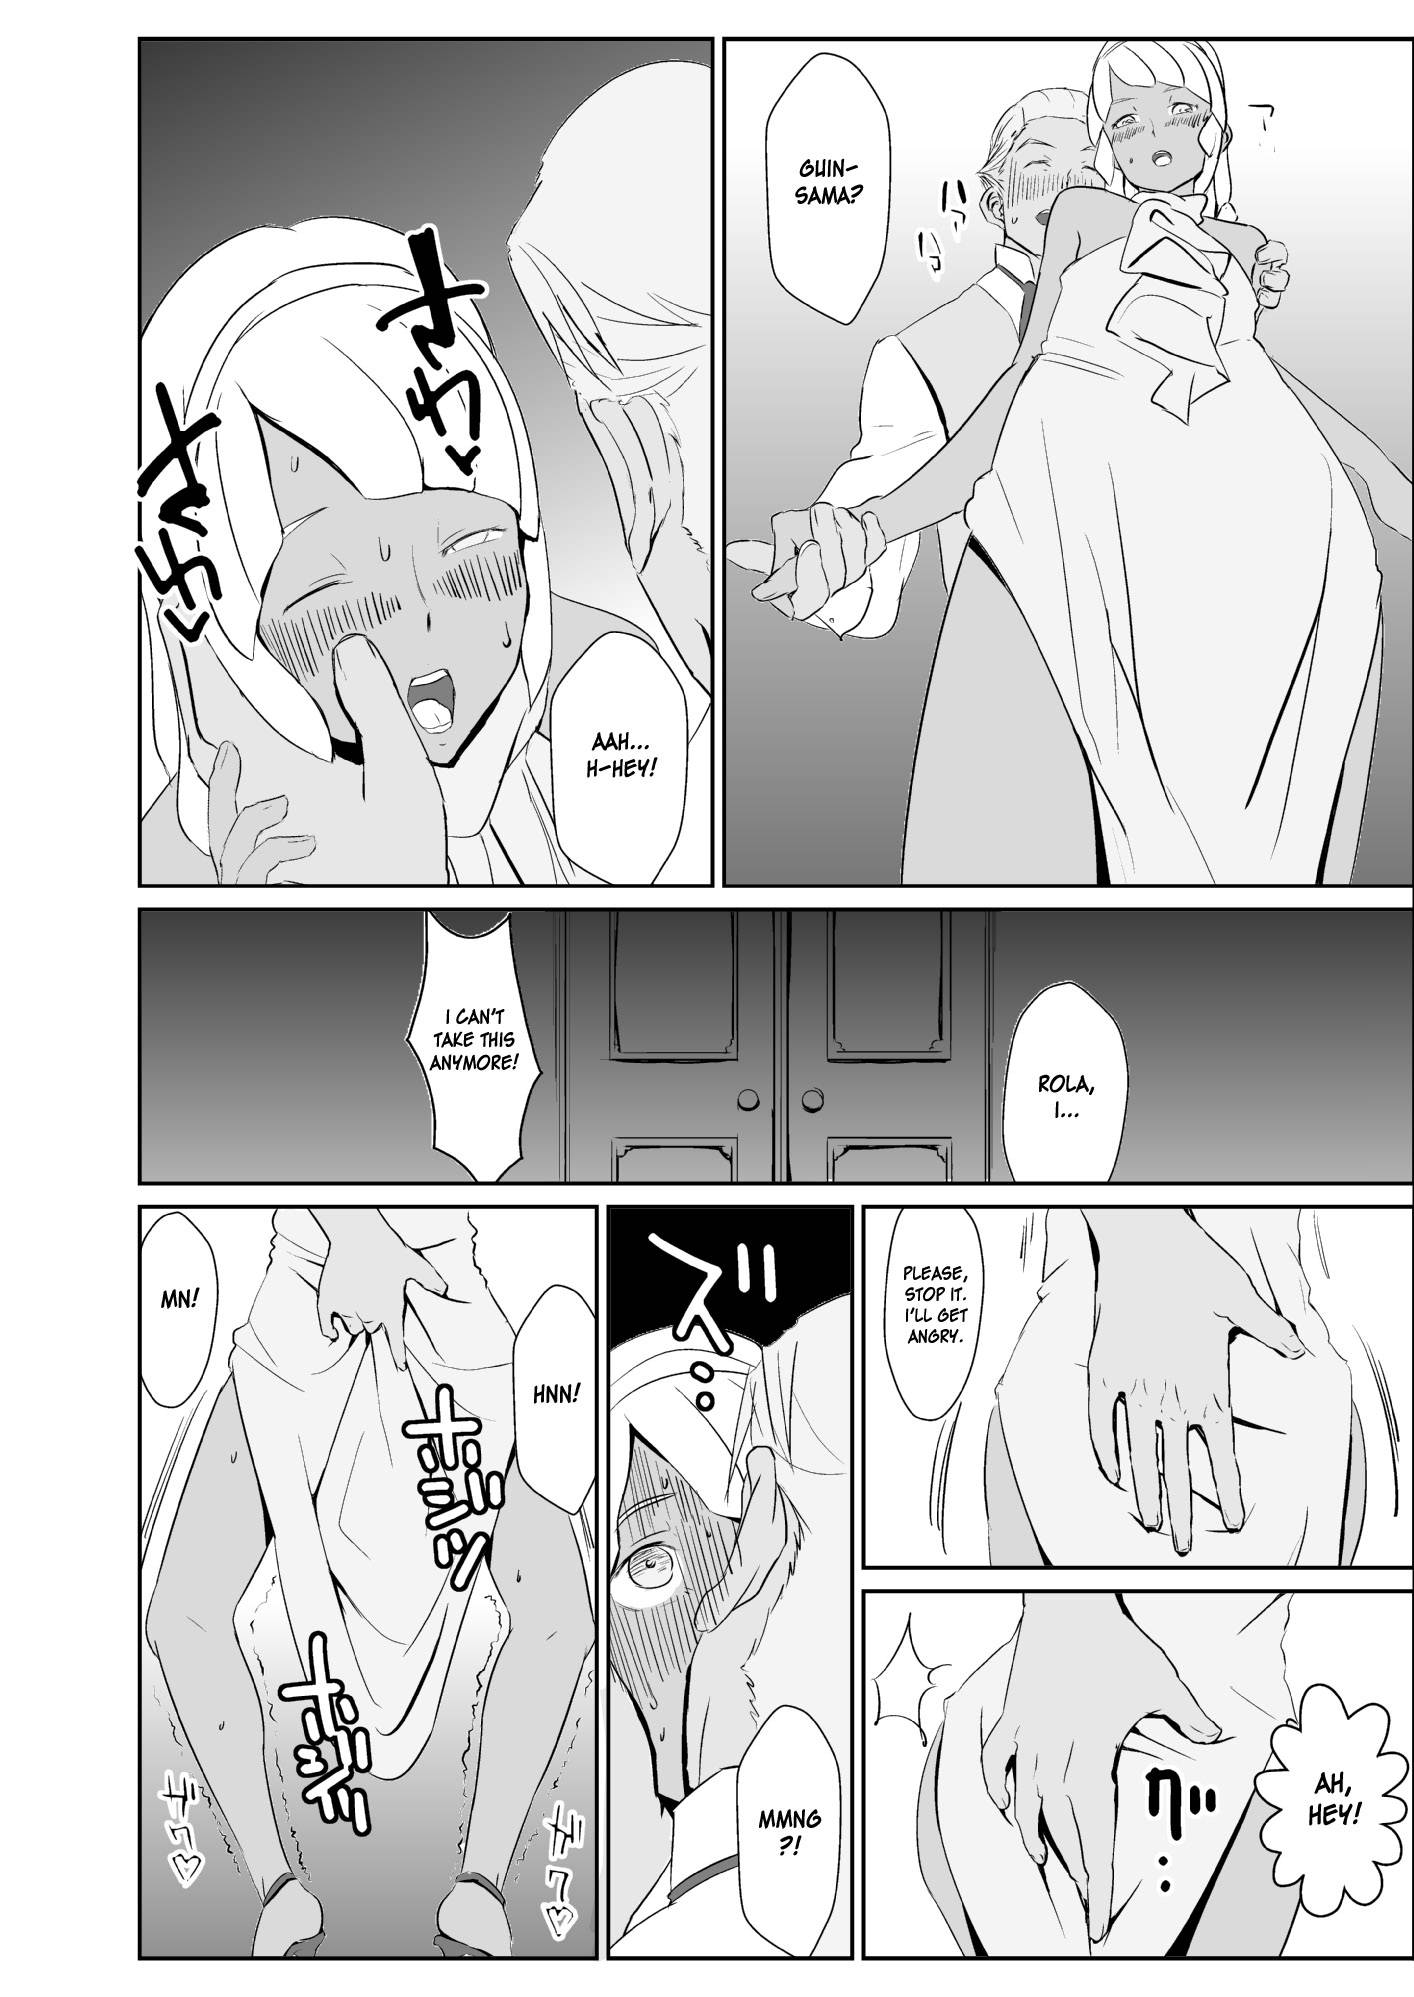 Reading Lauras Anal Sex Training Doujinshi Hentai By Kirsi 1